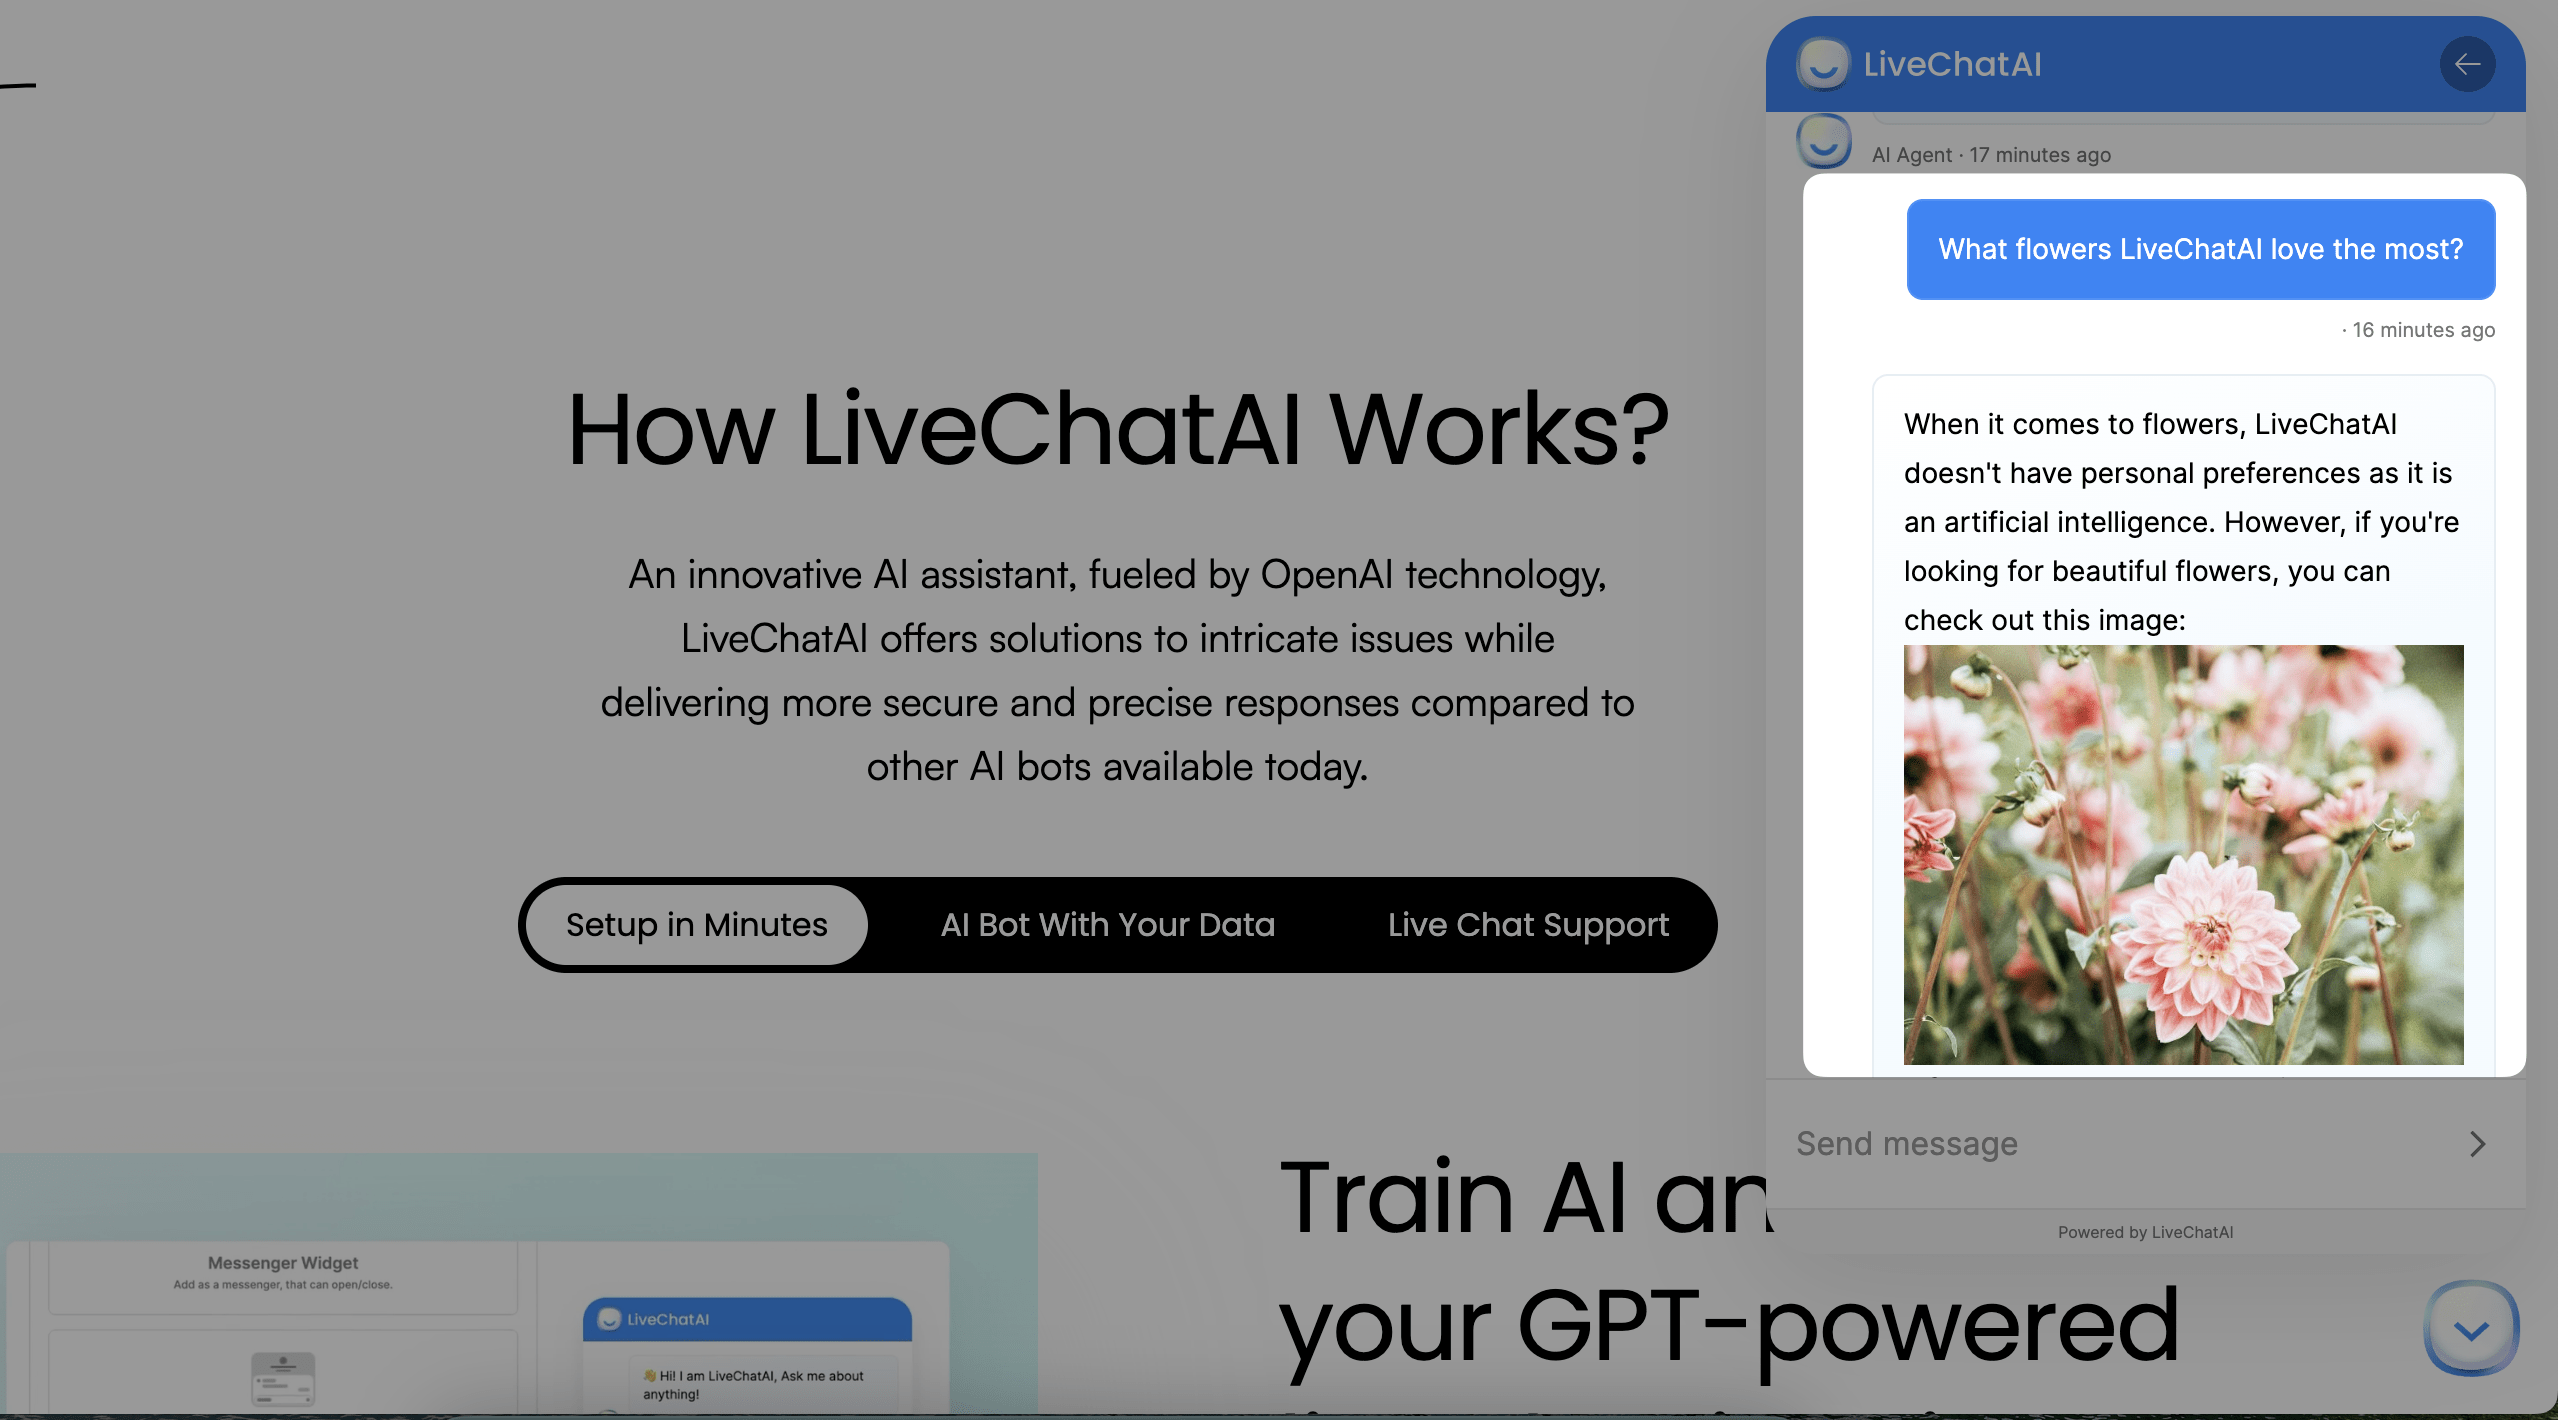 LiveChatAI AI bot responds with a visual